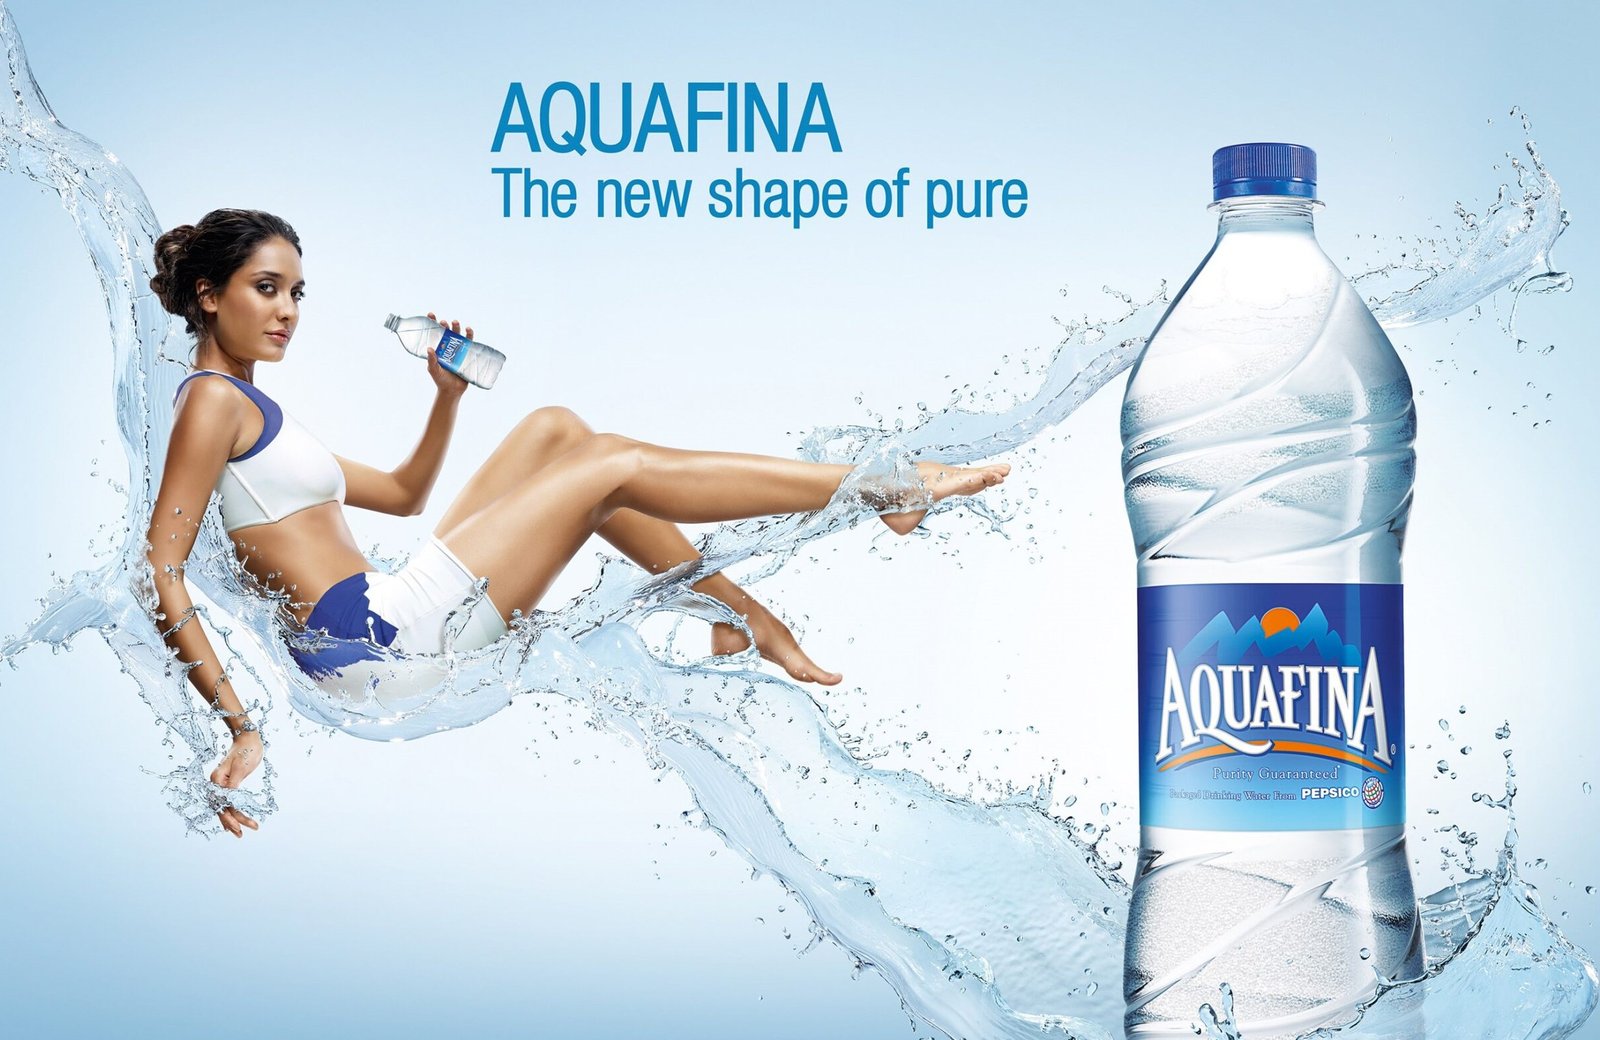 Aquafina Marketing Mix